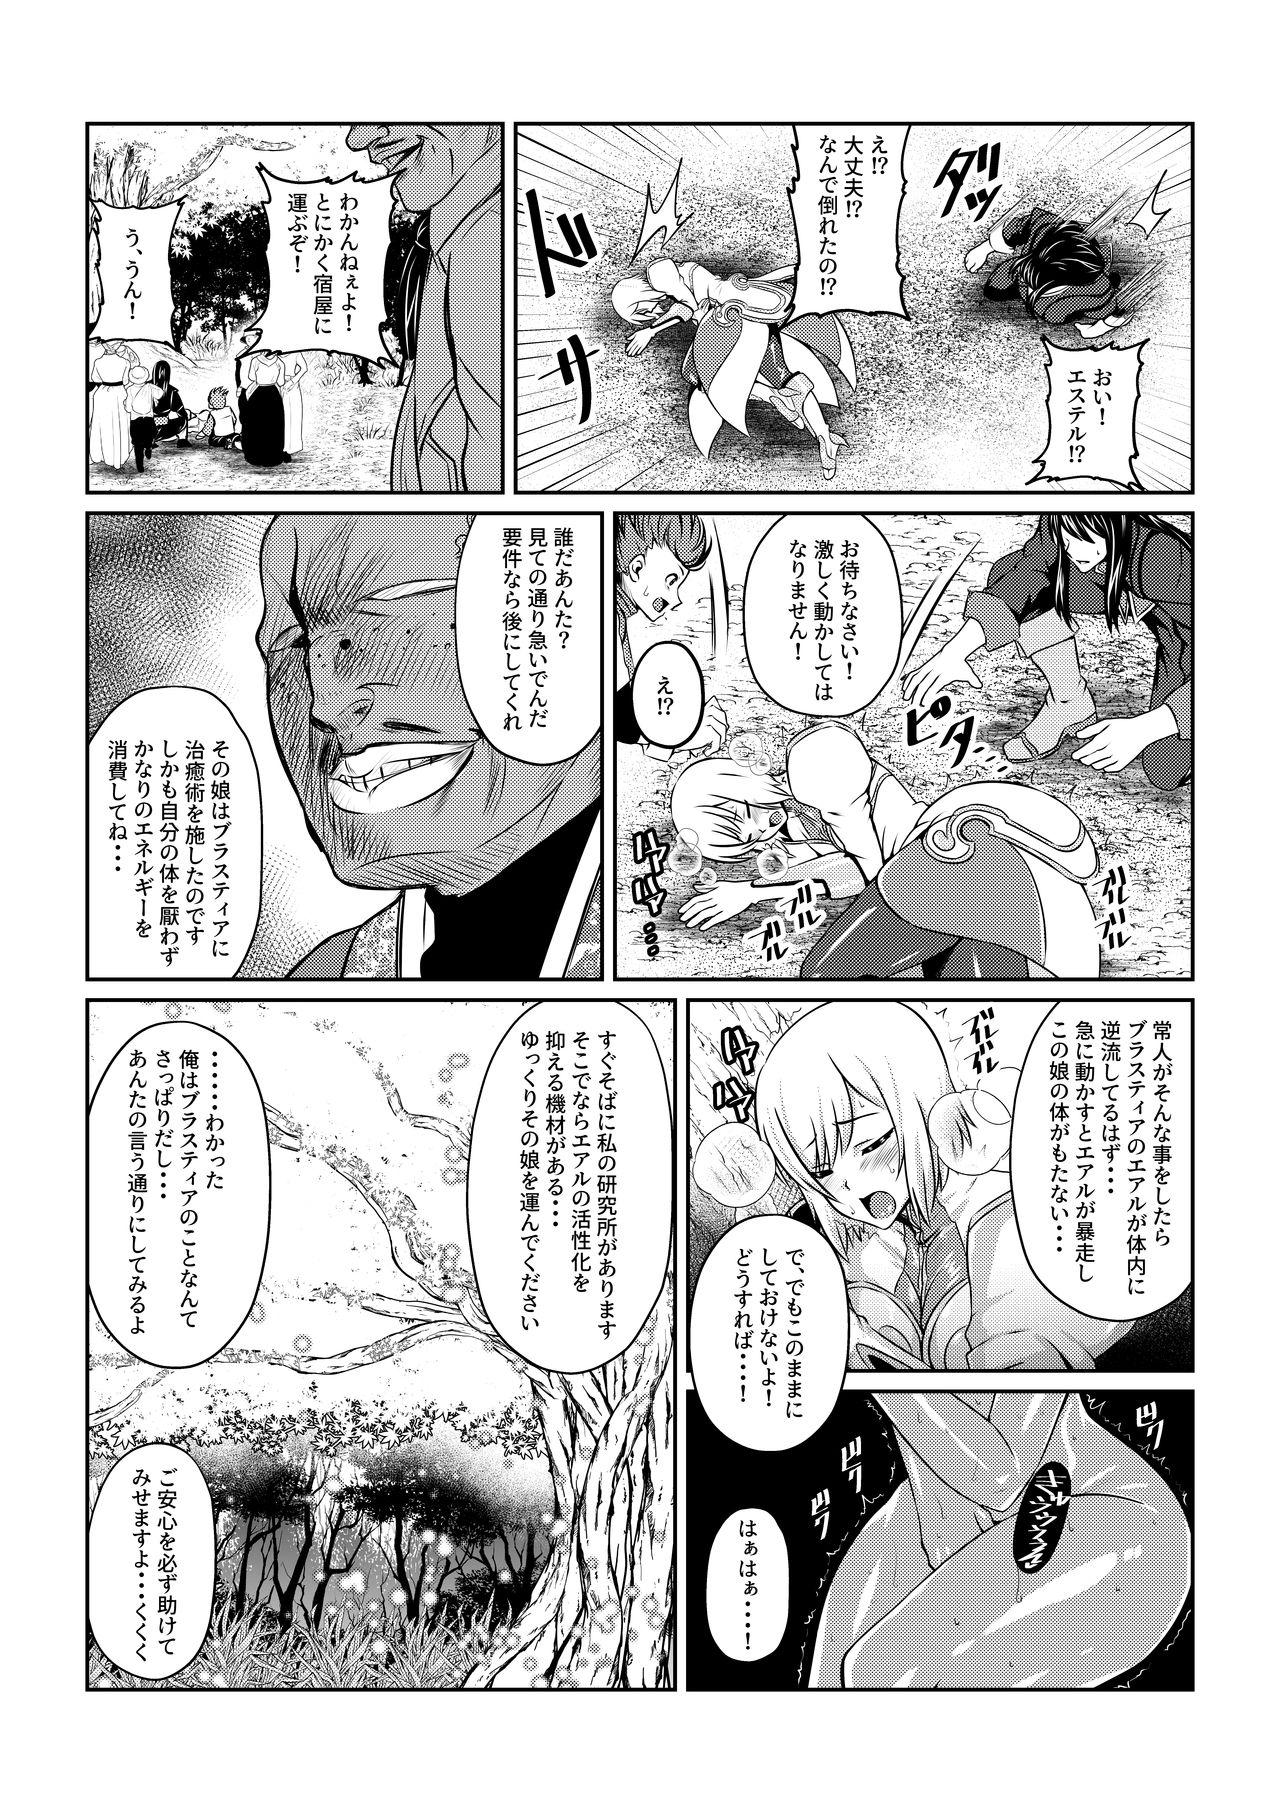 Hunk Gekka Midarezaki - Tales of vesperia Messy - Page 3